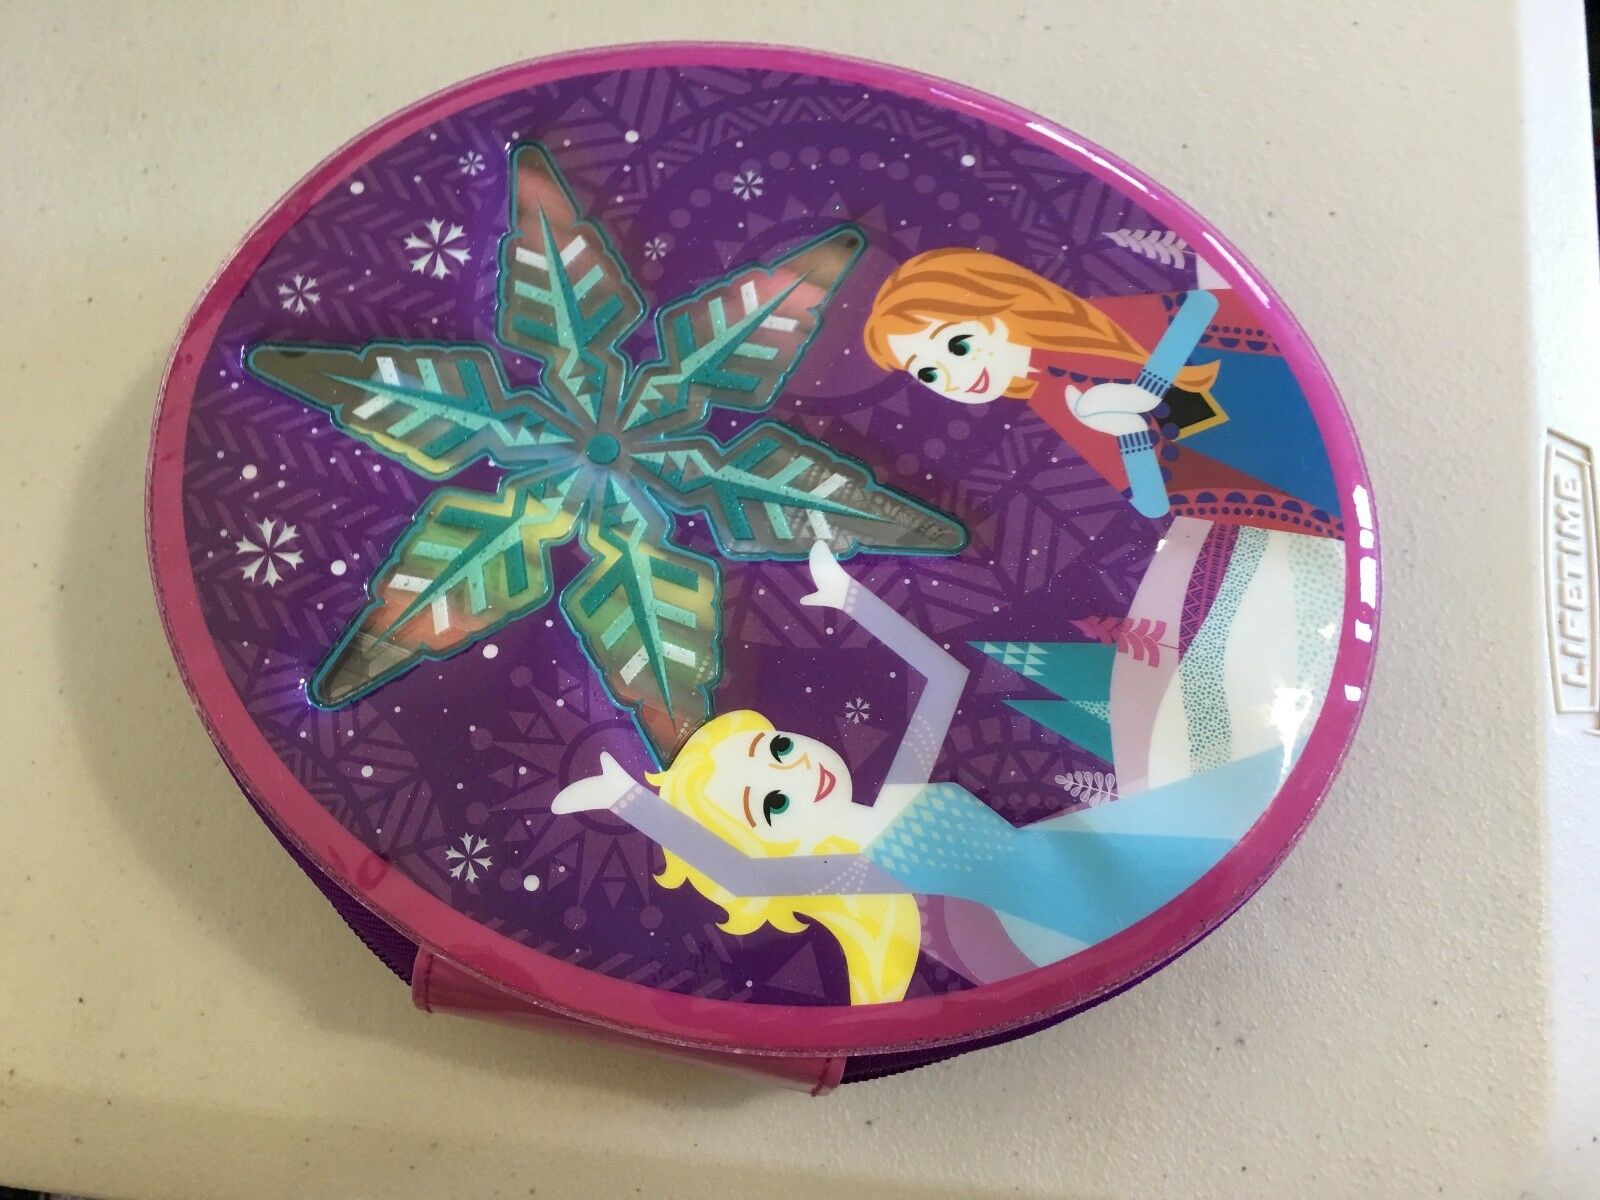 Nwt Disney Store Frozen Anna And Elsa Zip Up Stationary Kit School Supplies